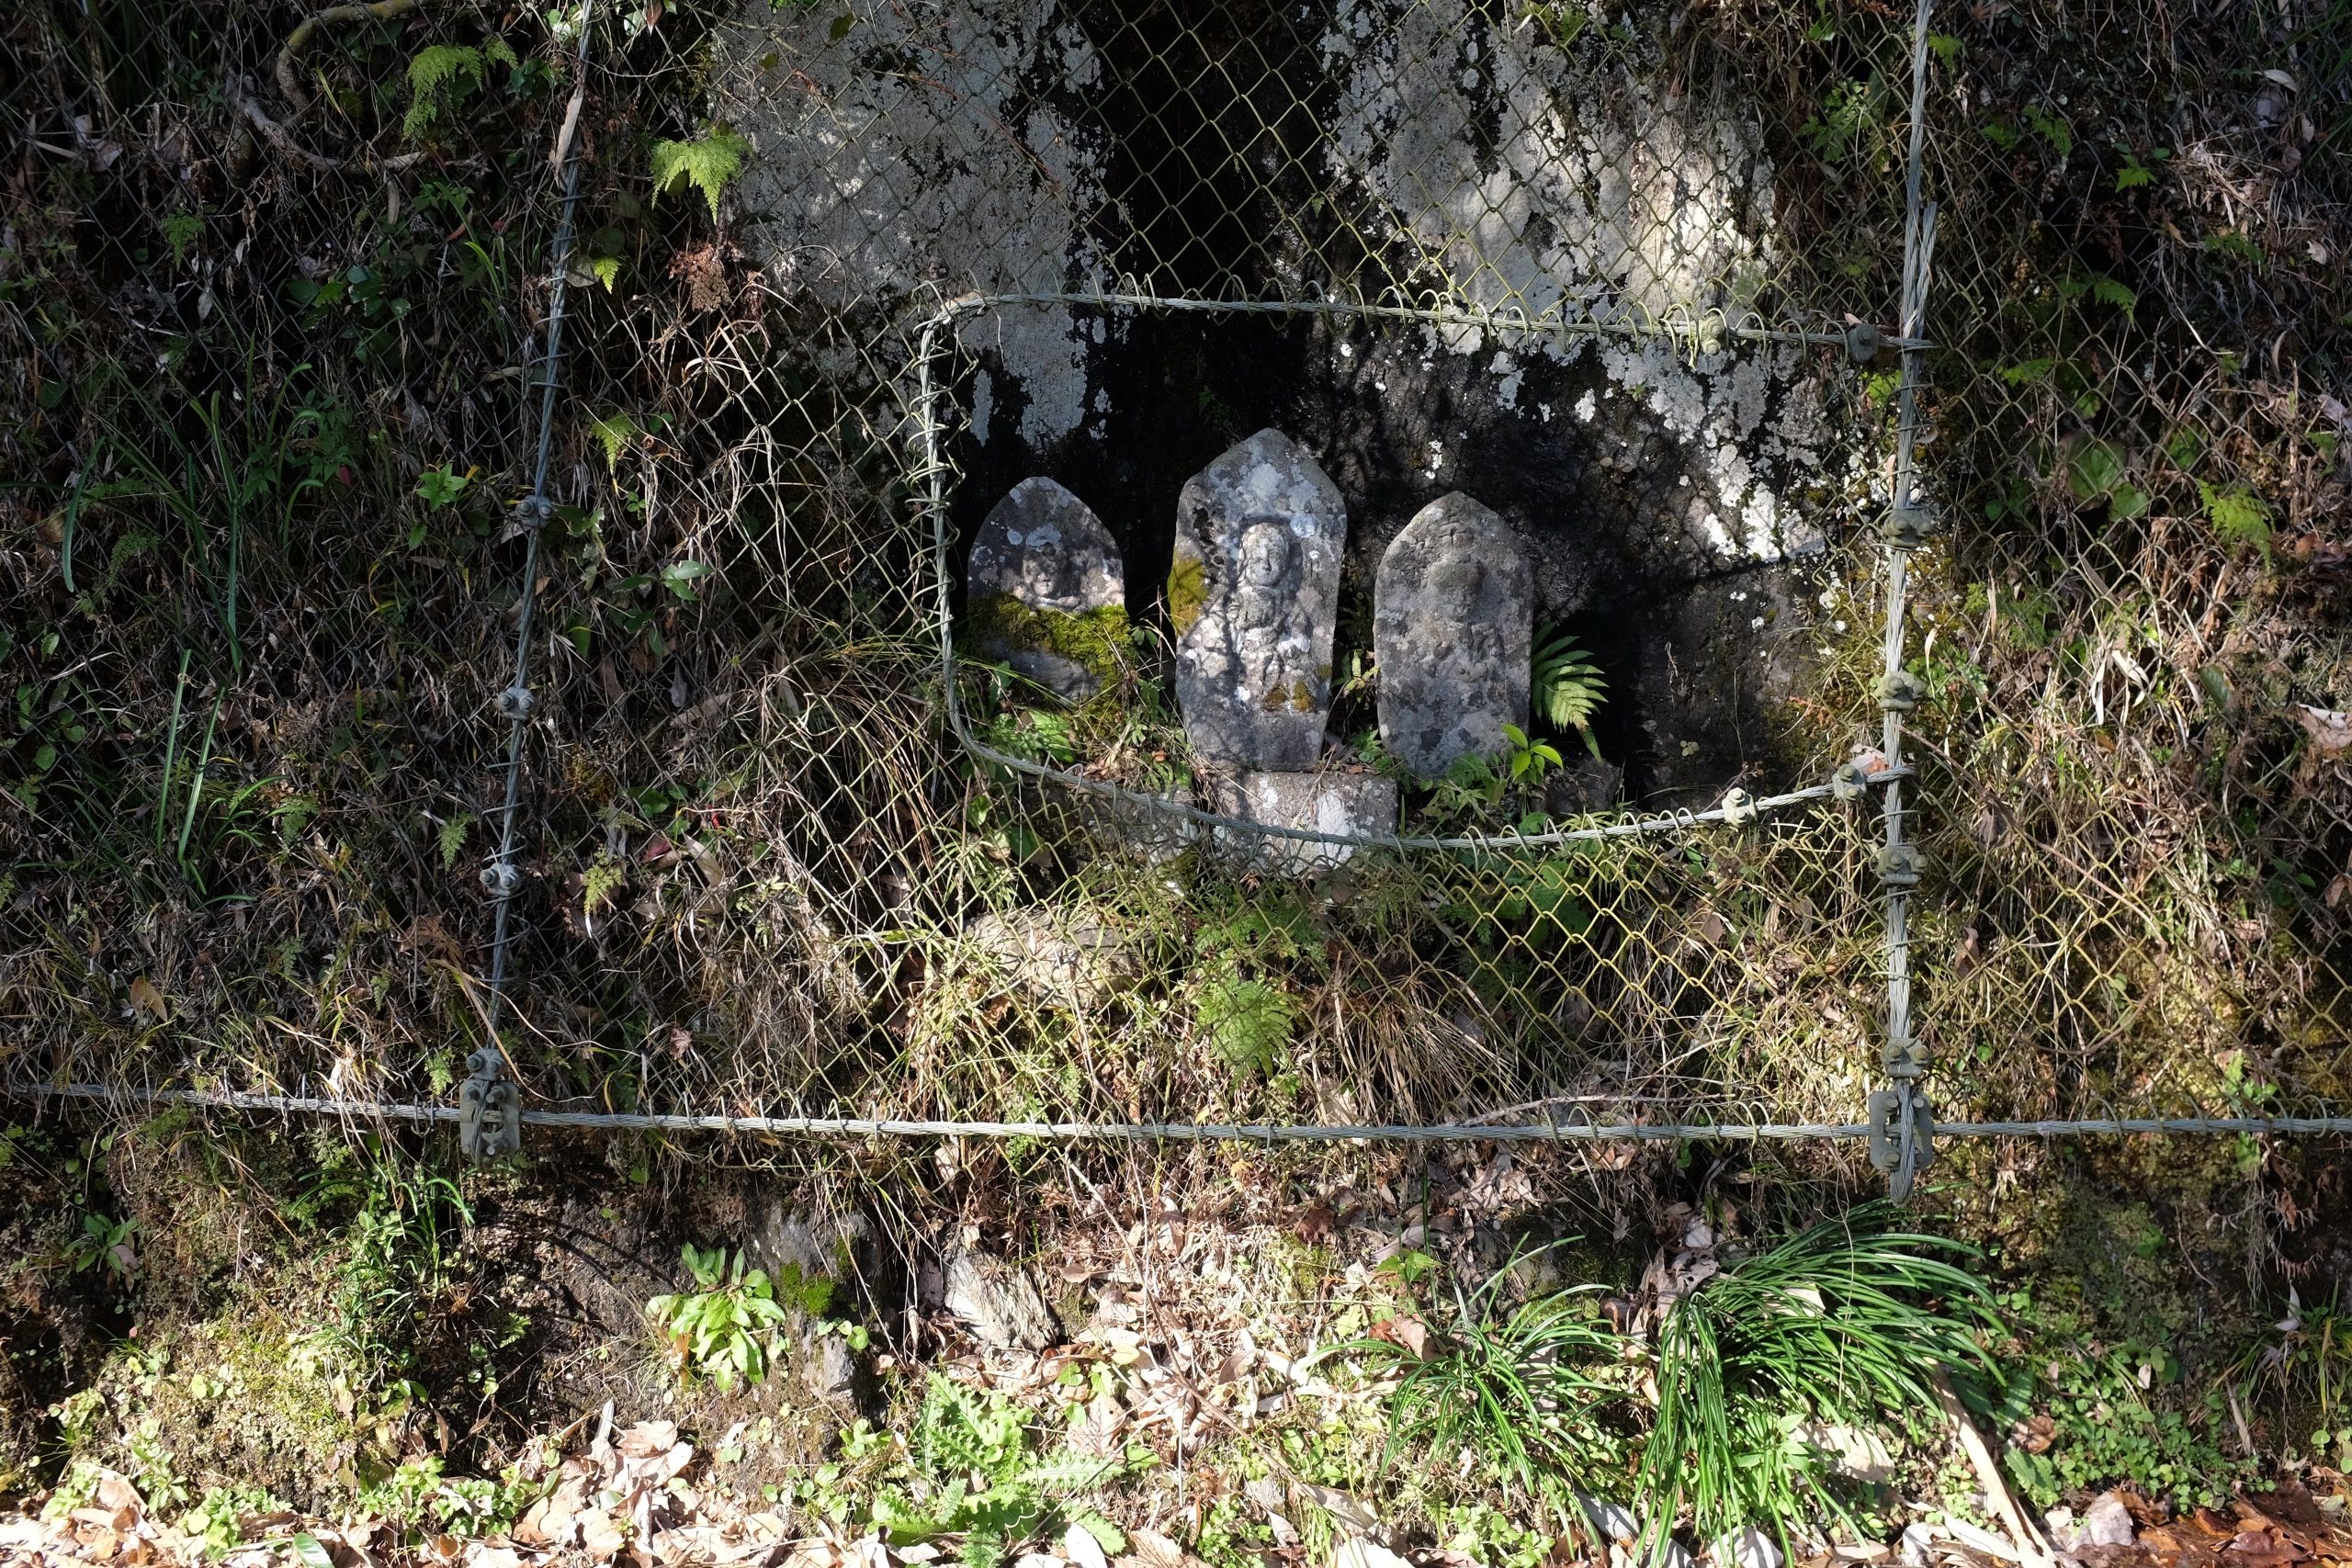 Three roadside deities peek through a window cut for them in a chain-link fence protecting against rockfalls.